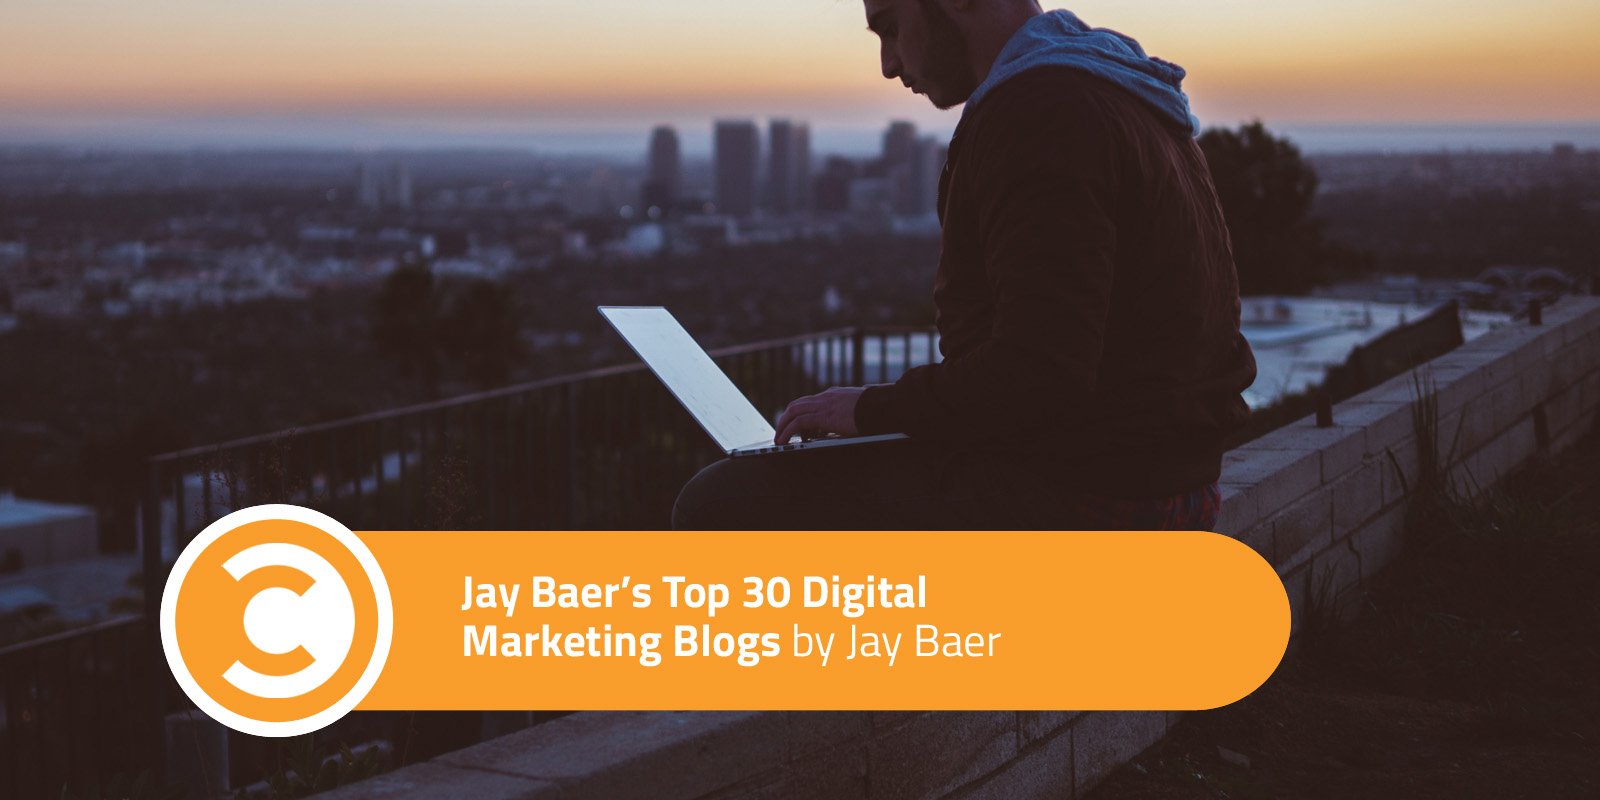 Jay Baer’s Top 30 Digital Marketing Blogs